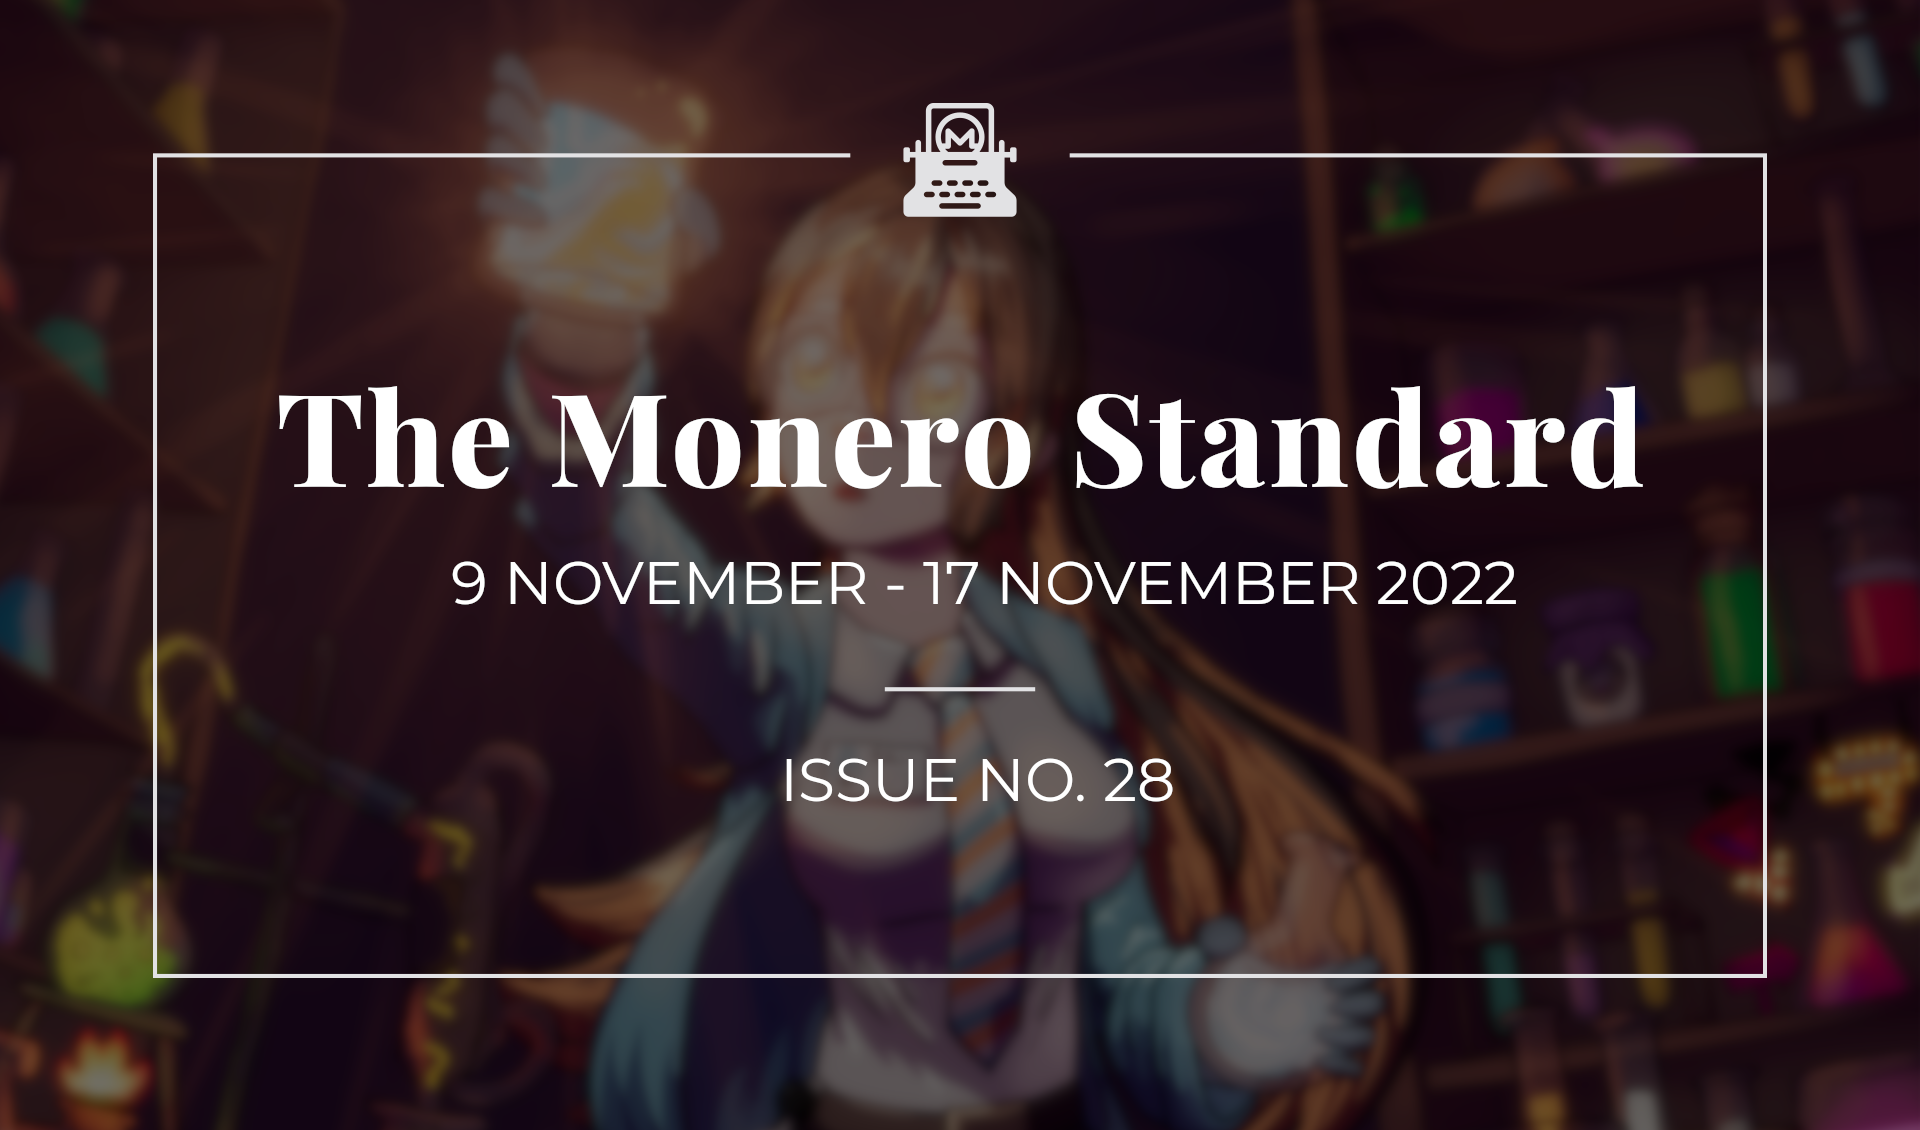 The Monero Standard #28: 9 November 2022 - 17 November 2022